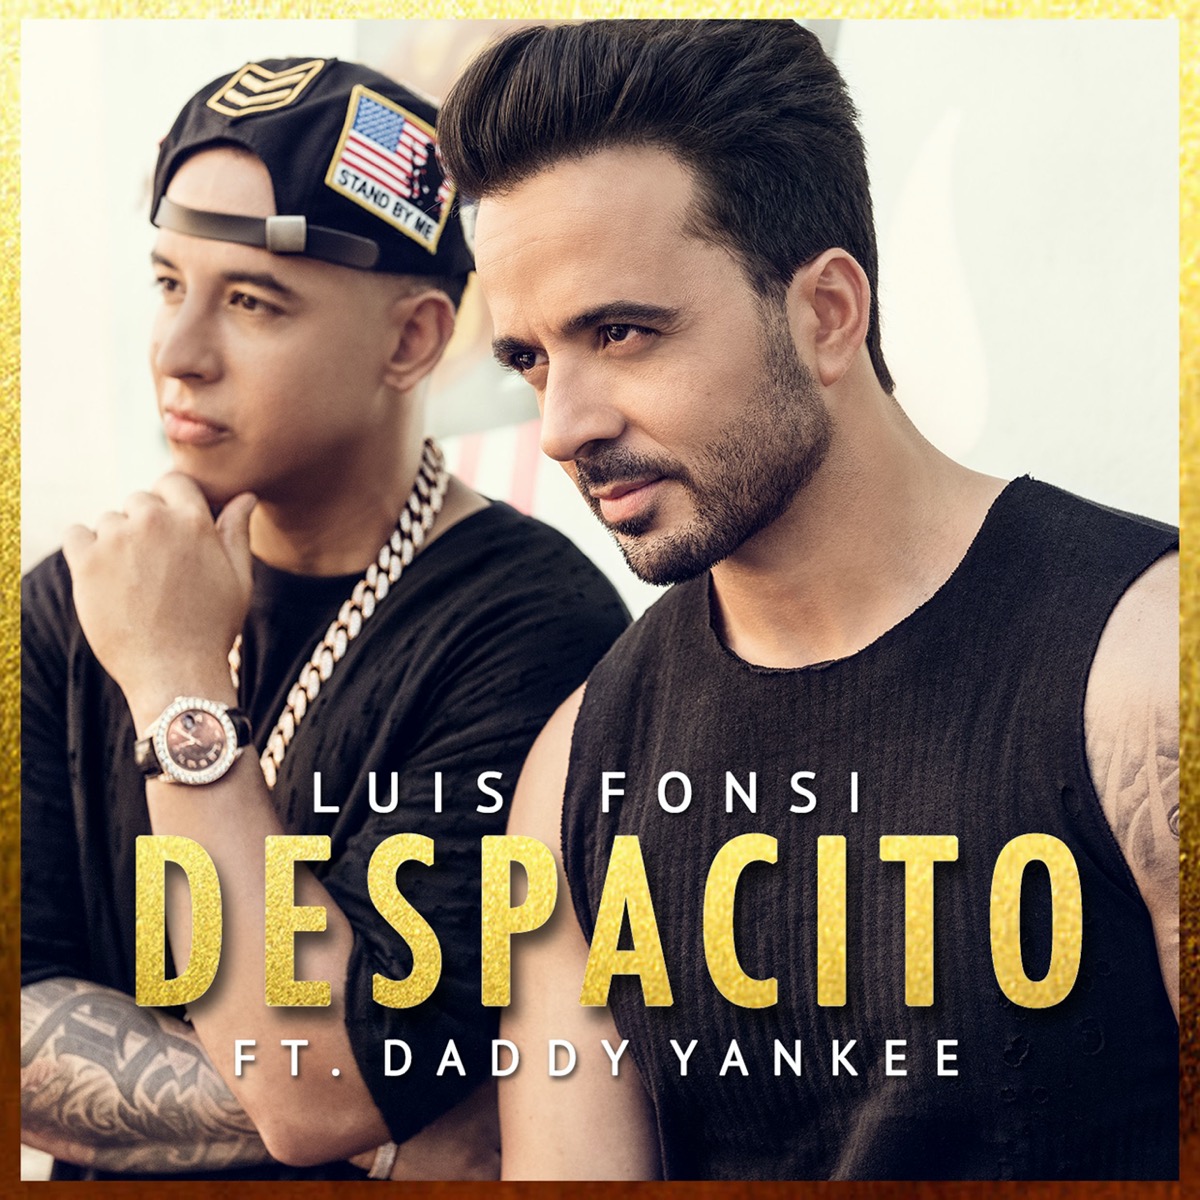 Luis Fonsi "Despacito" single cover